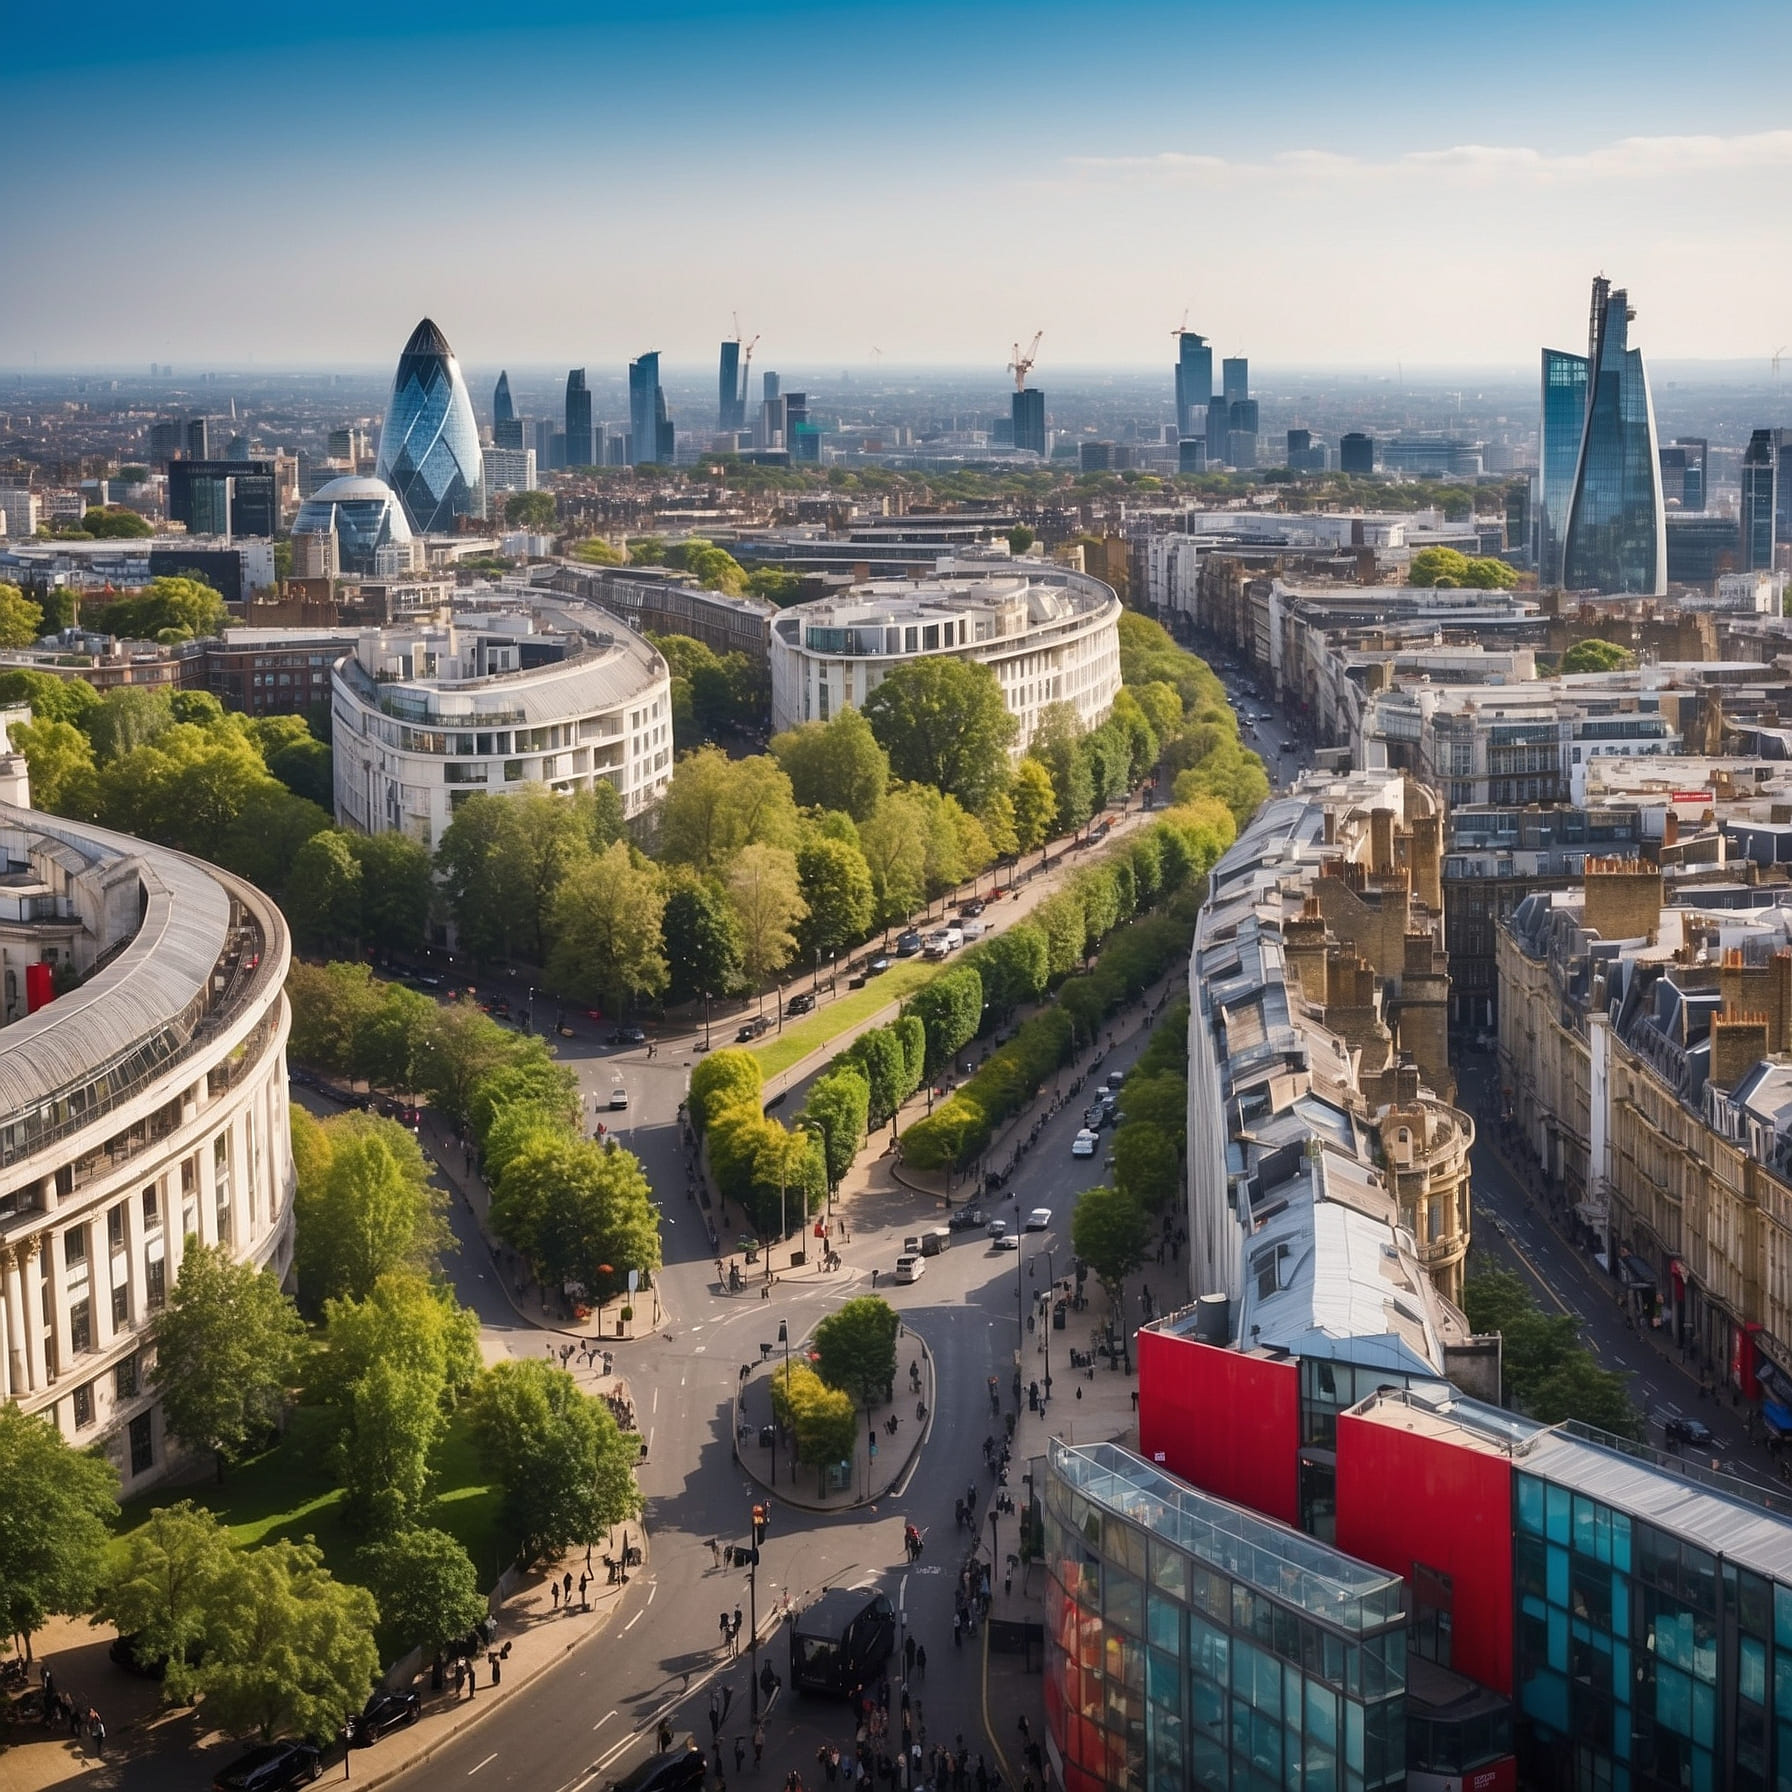 Cost of Renting Has Fallen in London